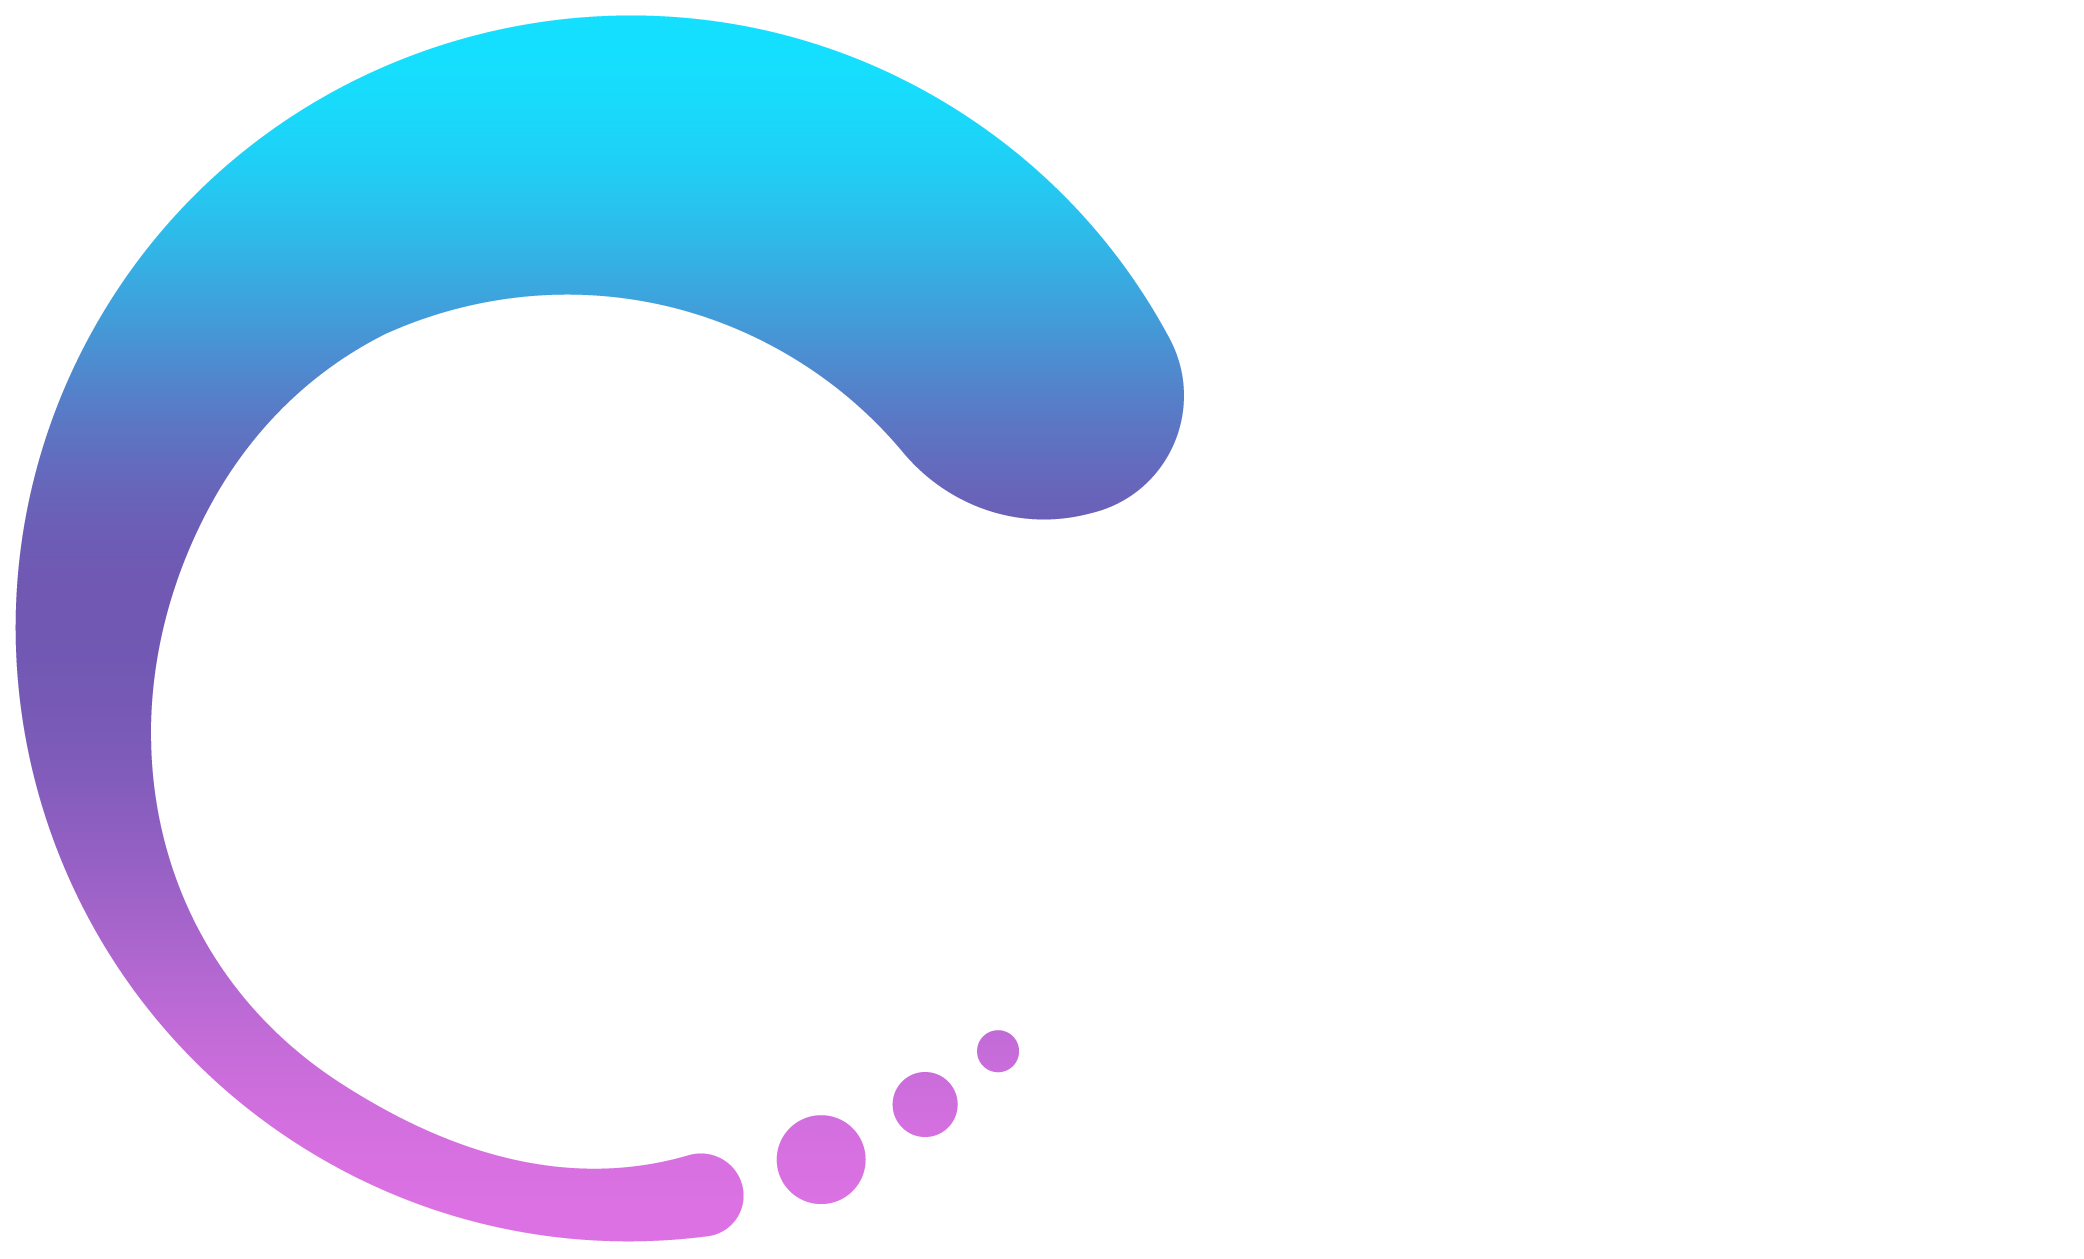 AppTools